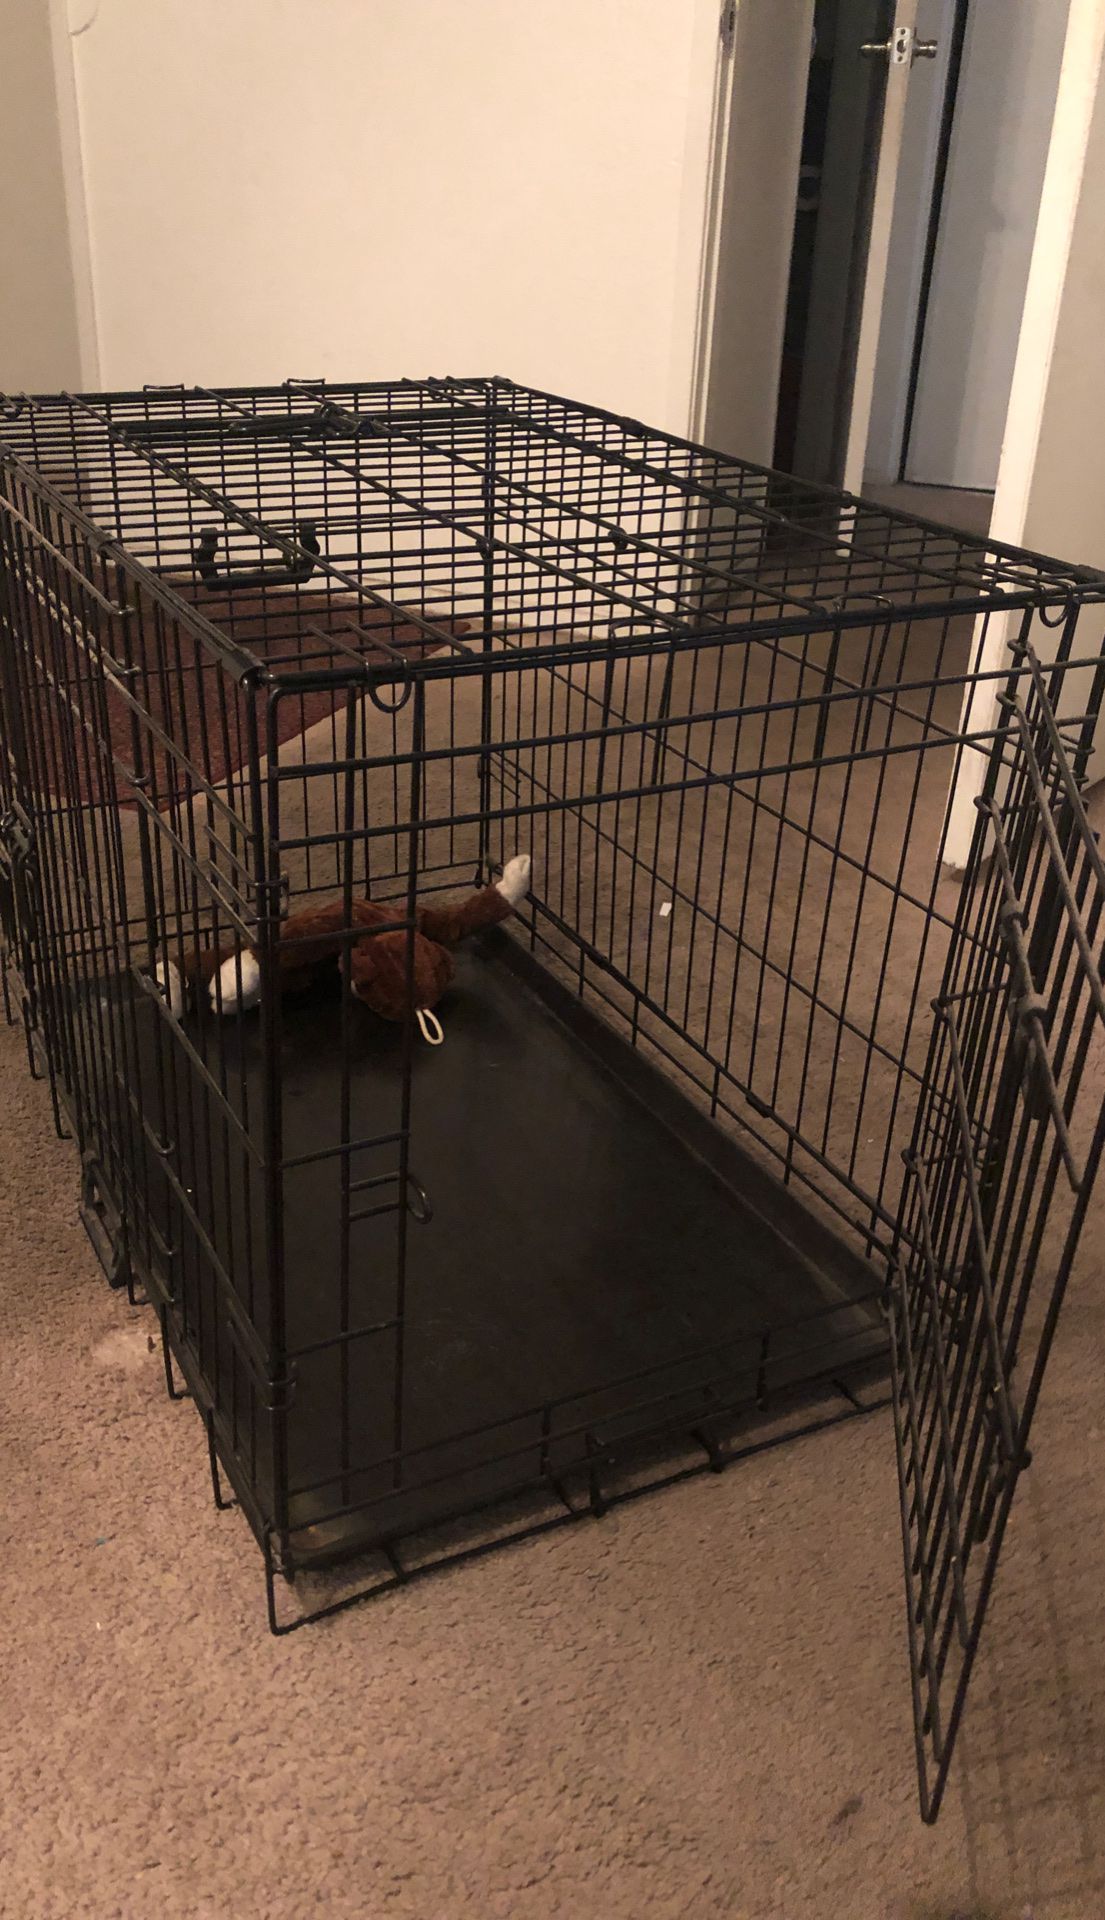 Medium folding Dog Cage 2Door Pet Crate Kennel+Tray